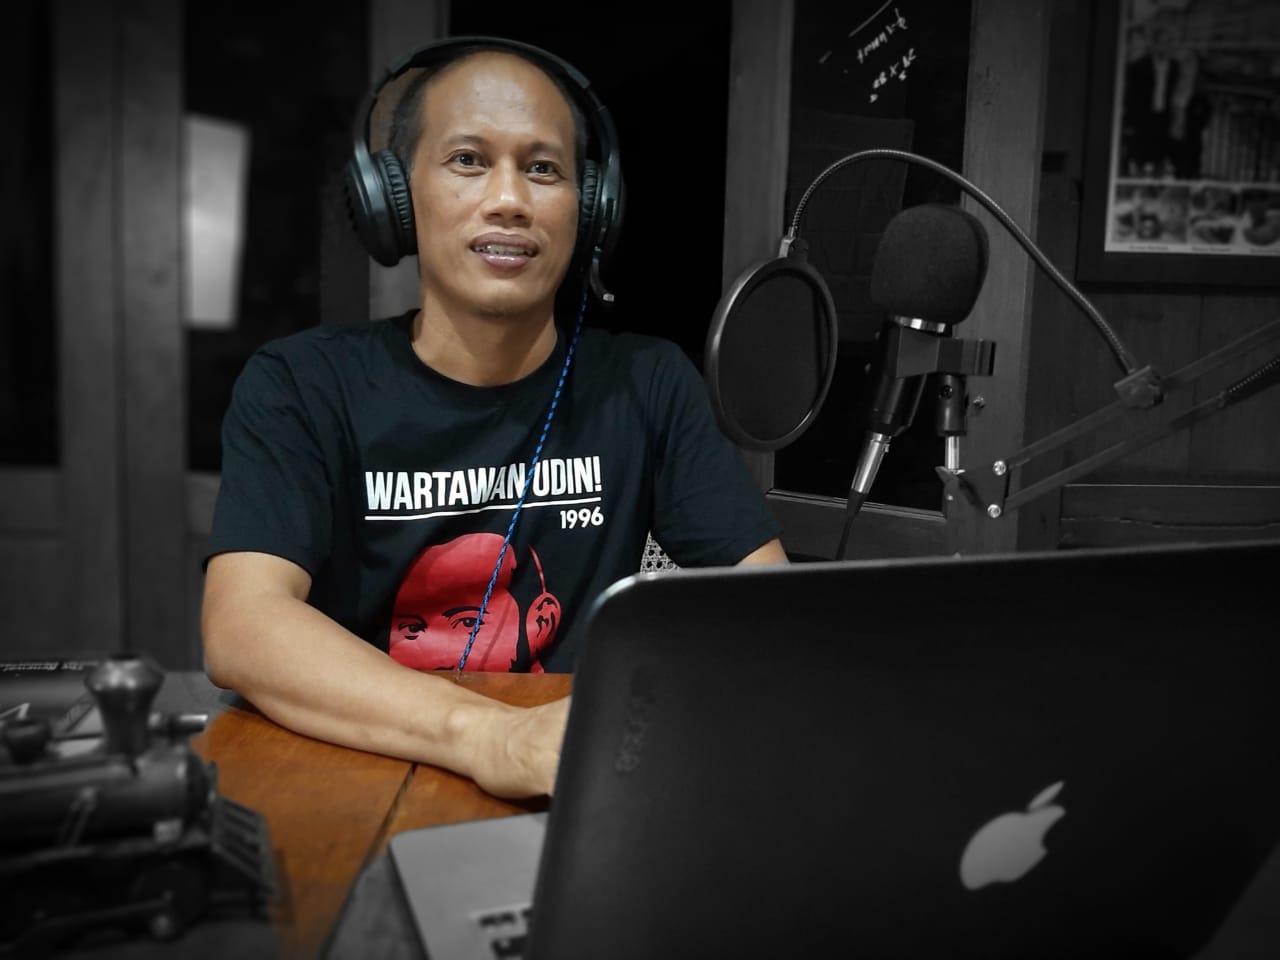 Masduki, lecturer at the Department of Communications, Universitas Islam, Indonesia and former Programme Director of Radio Republik Indonesia (RRI)